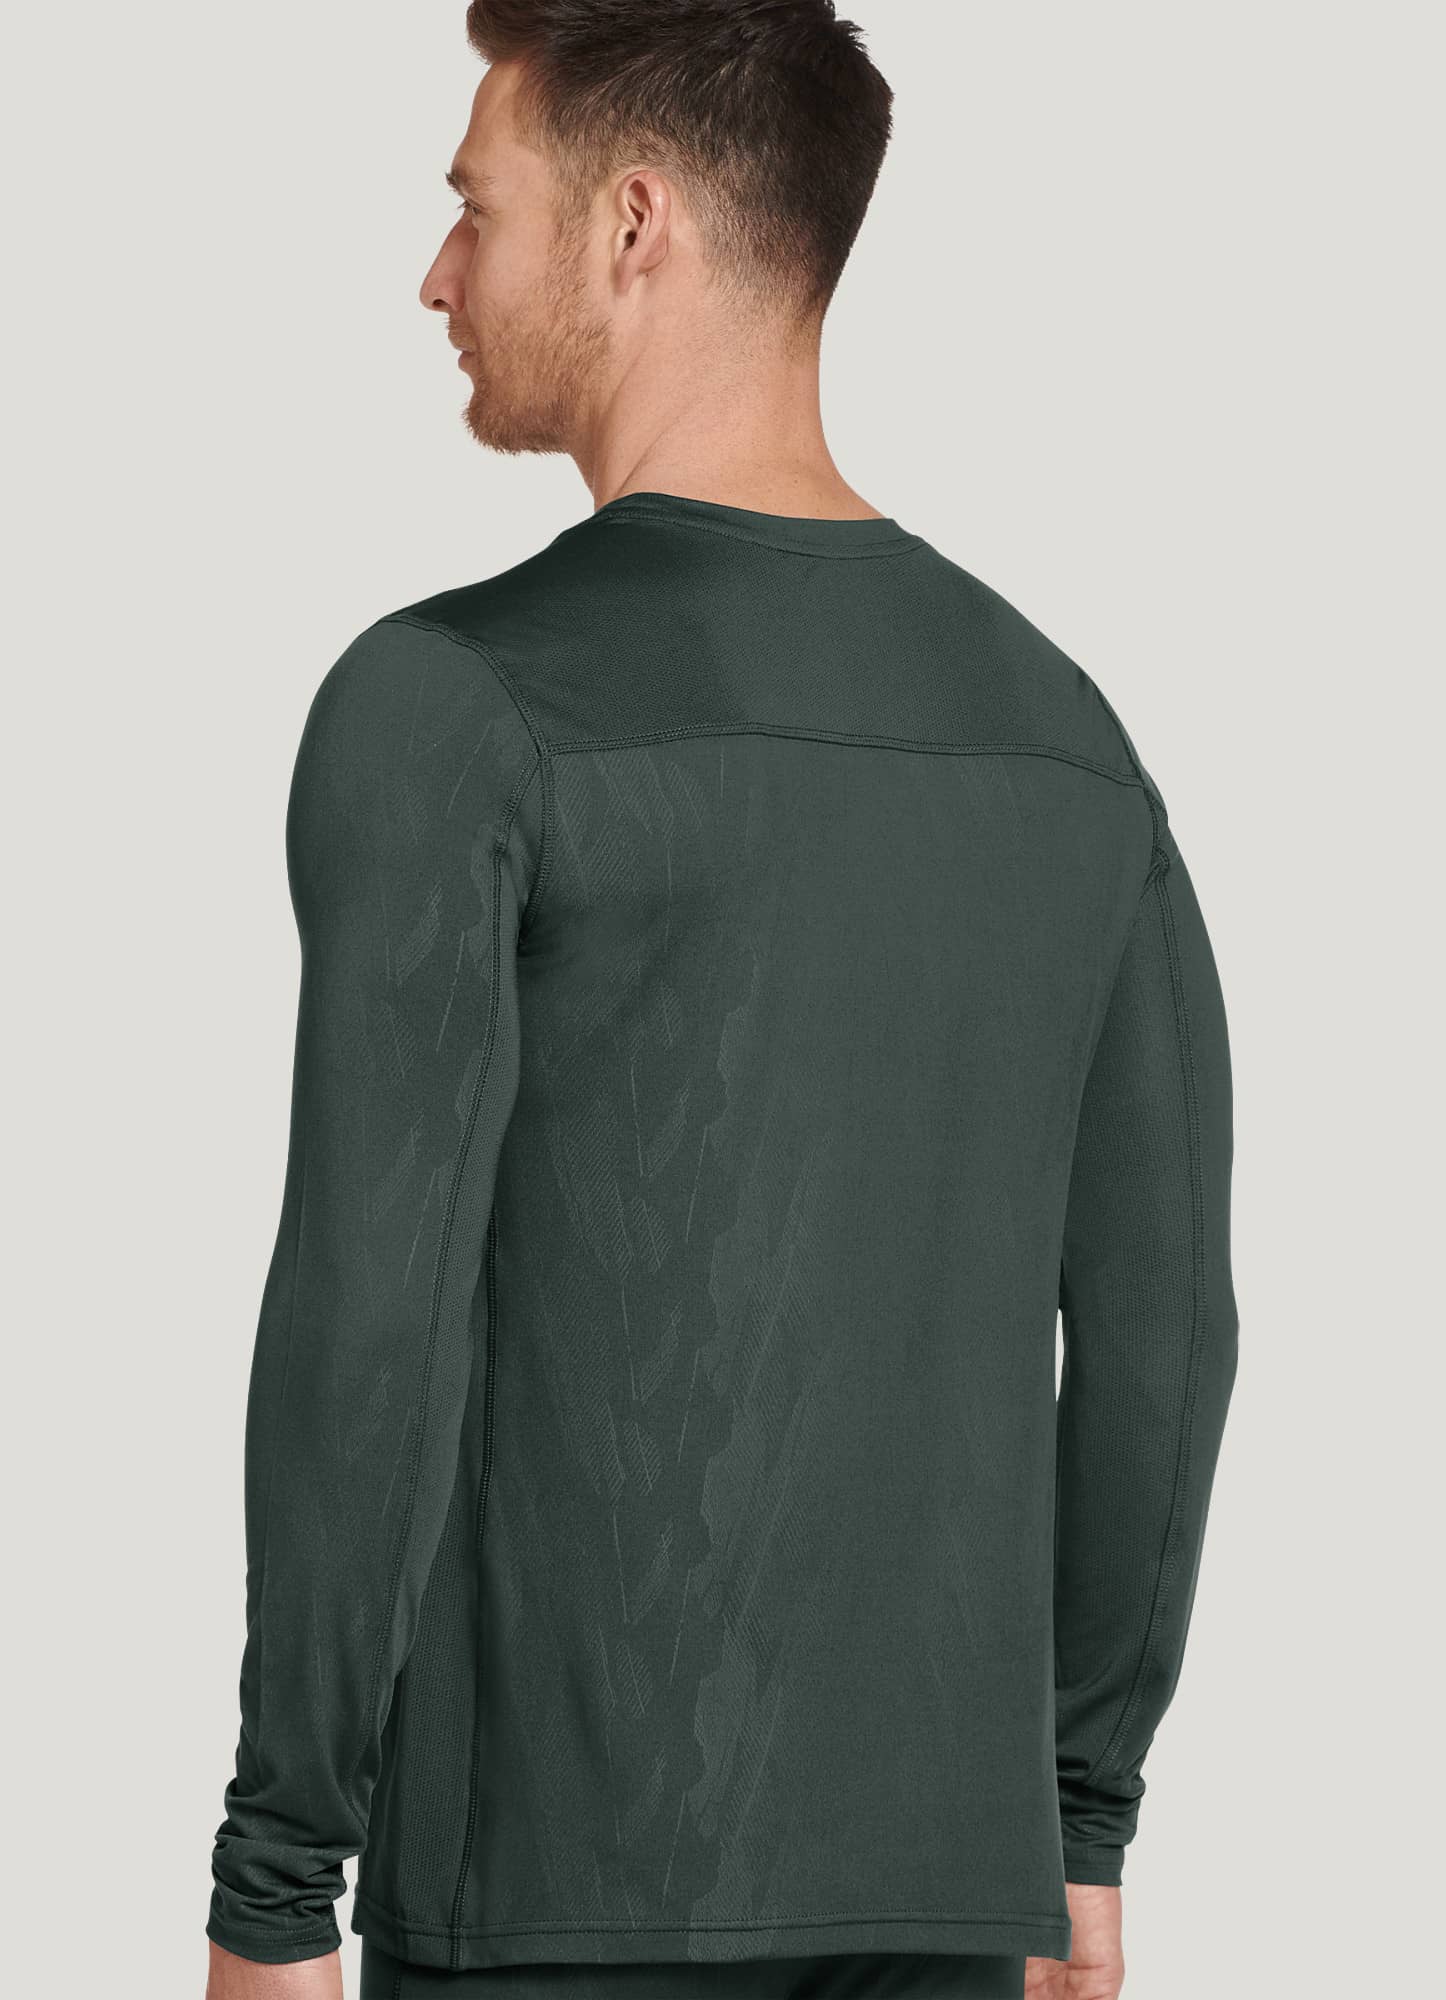 Buy Jockey Thermal Long Sleeve T-Shirt for Men 2401_Black_M &  (2401_Charcoal Melange_M) at